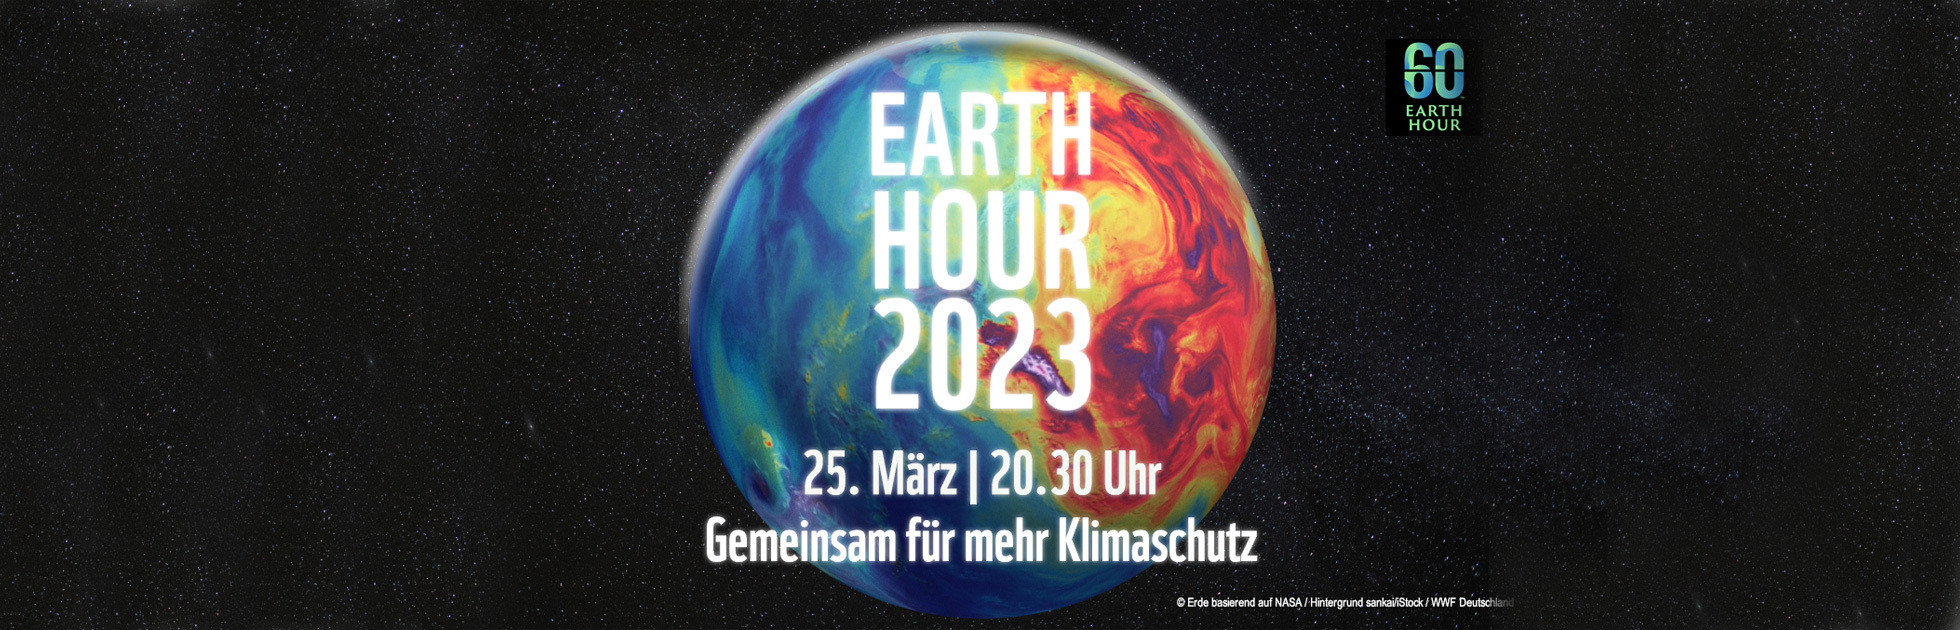 Earth Hour BadDepot.de